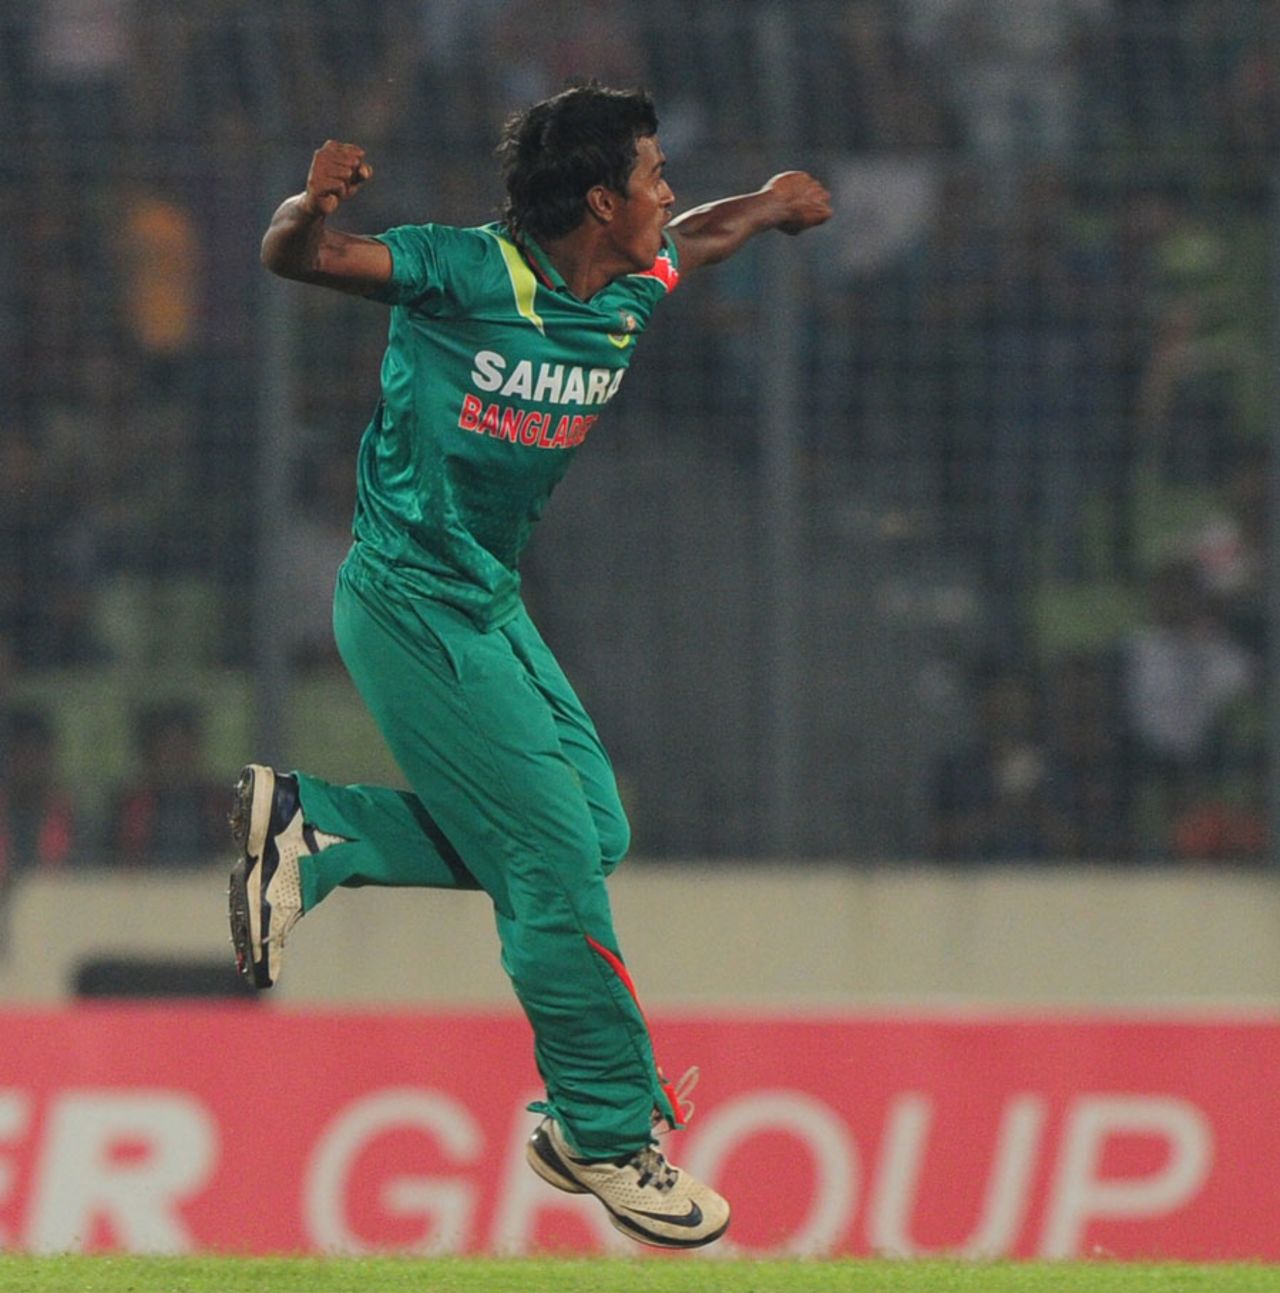 Rubel Hossain exults after a wicket, Bangladesh v New Zealand, 1st ODI, Mirpur, October 29, 2013